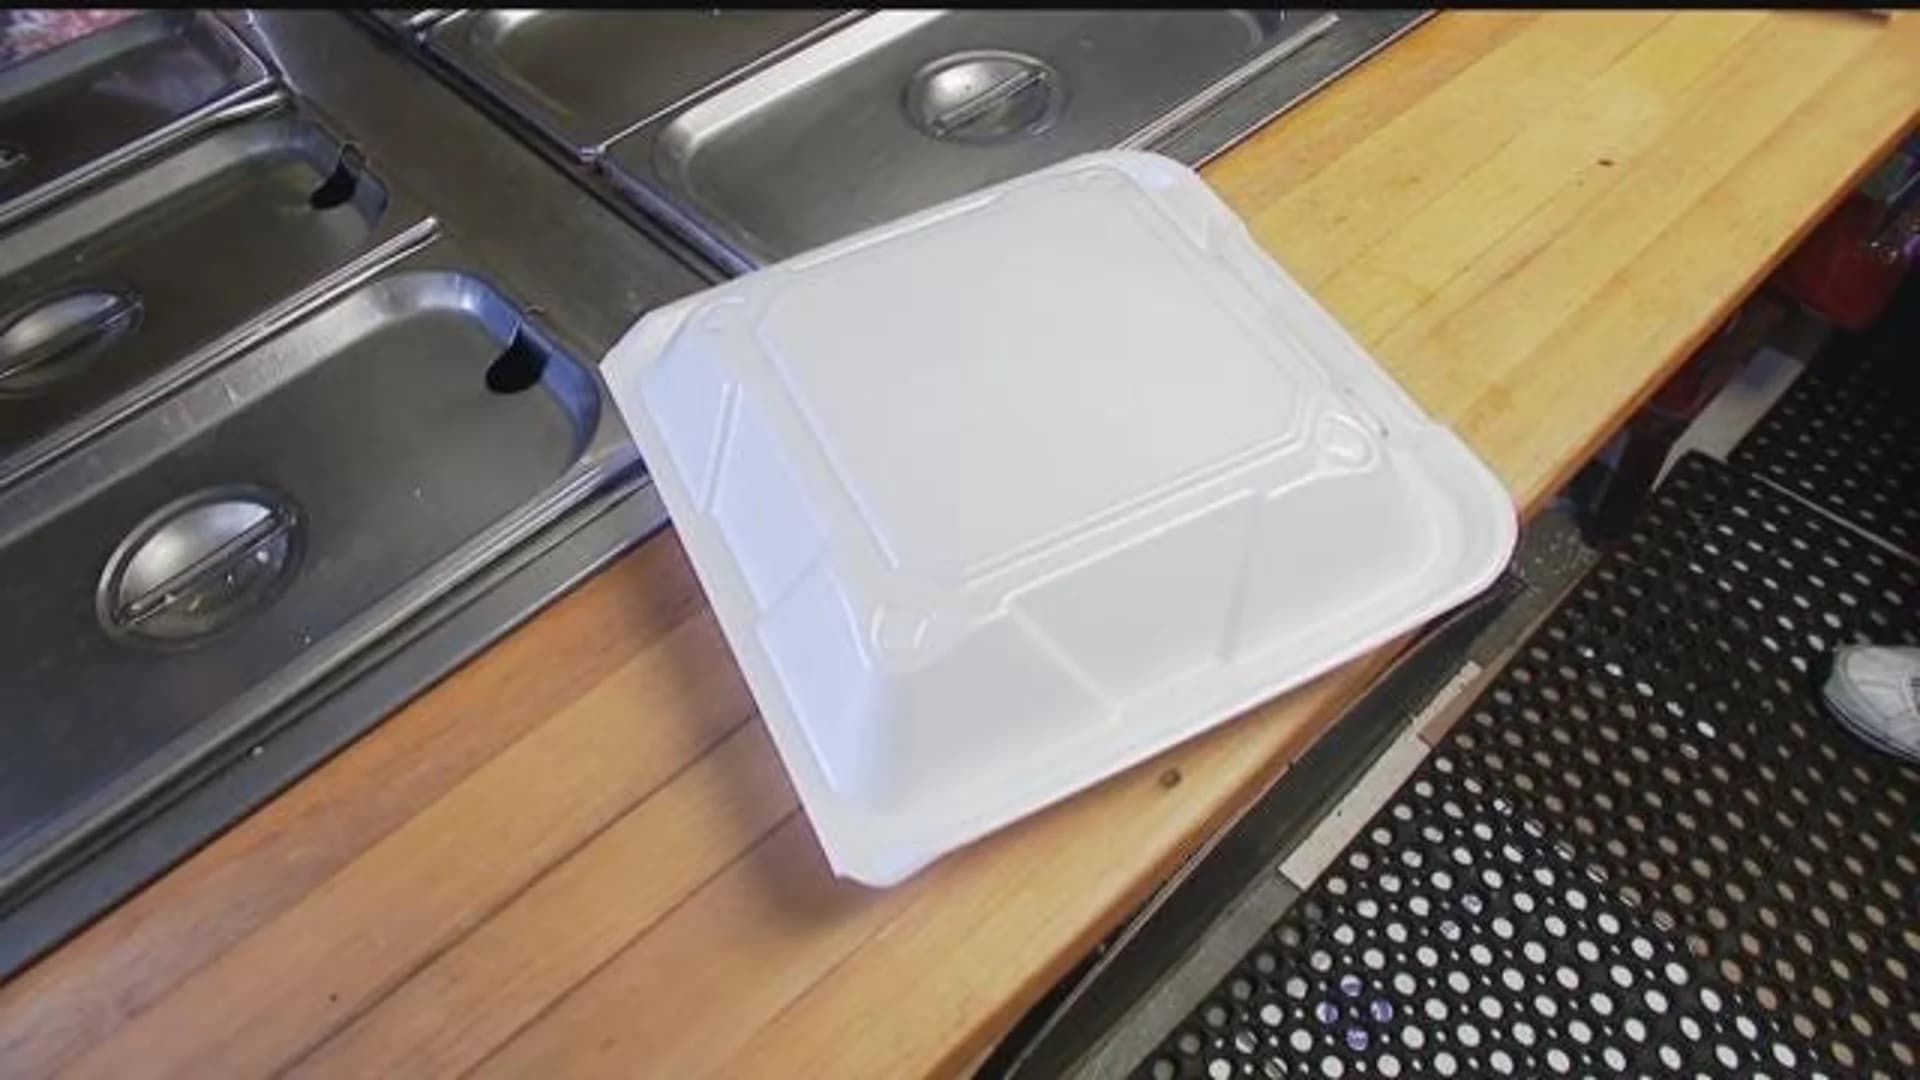 Legislative committee votes to ban Styrofoam boxes, plastic bags